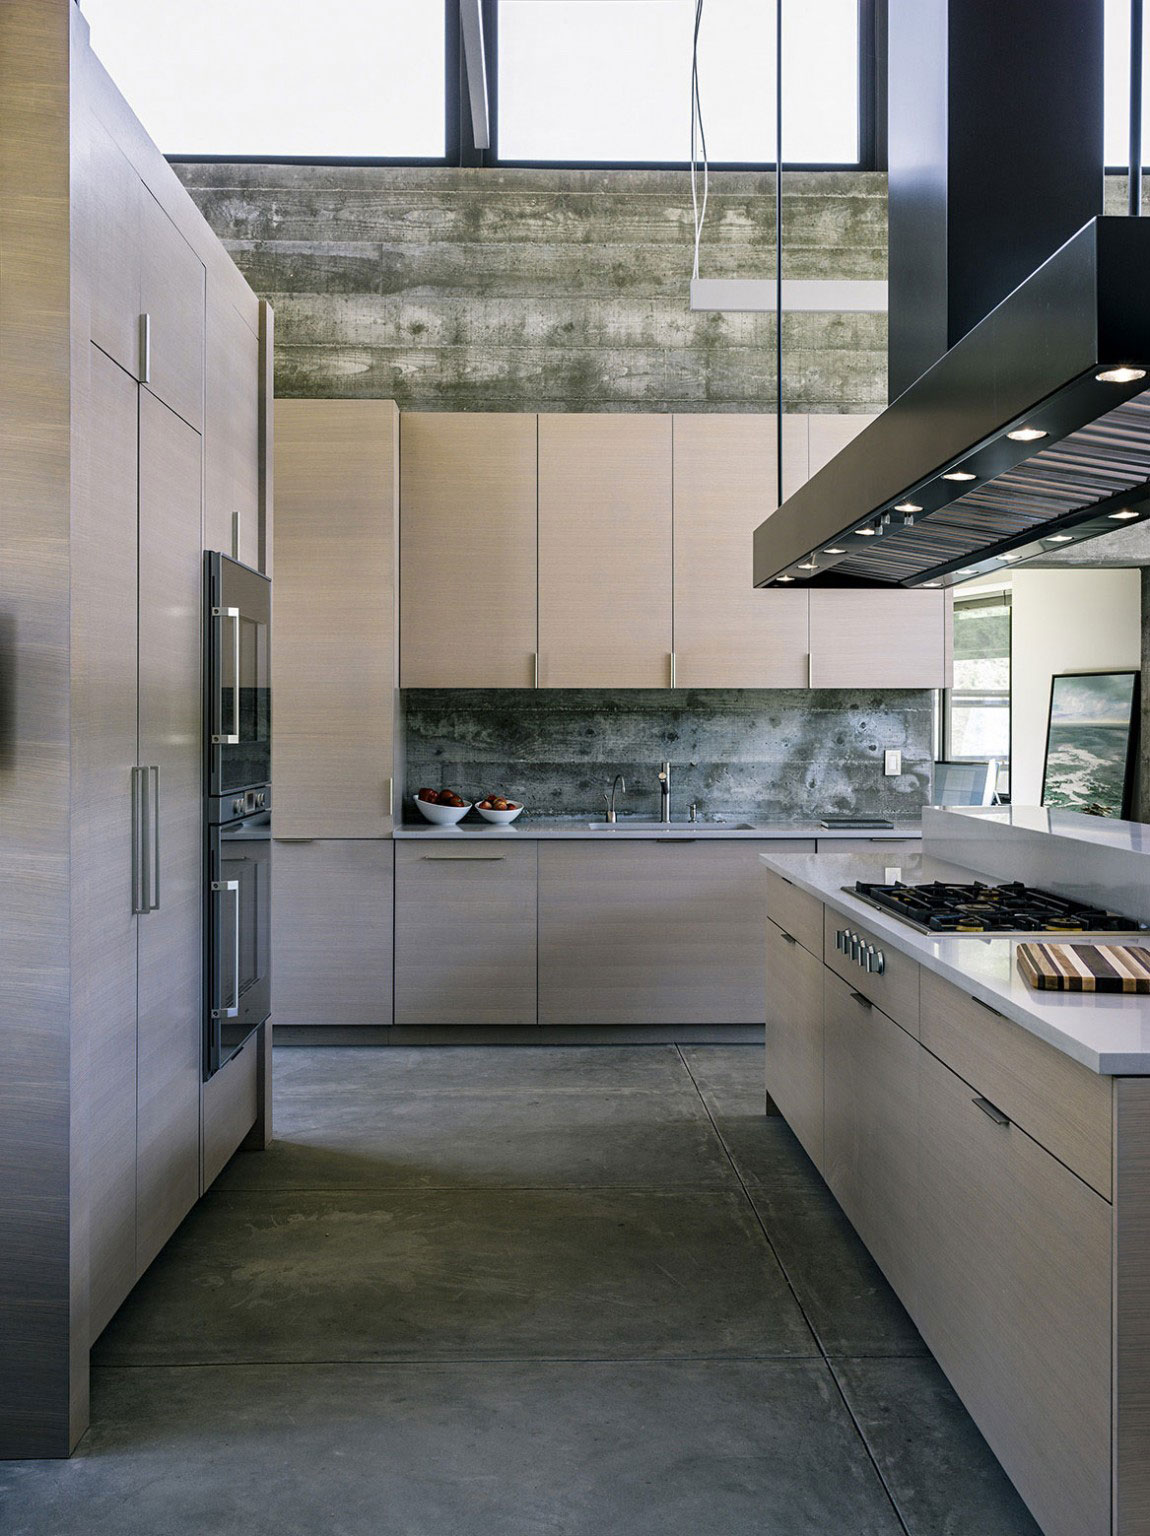 Create-A-Kitchen-Modern-Interior-Design-6 Create A Kitchen Modern Interior Design For A Contemporary House